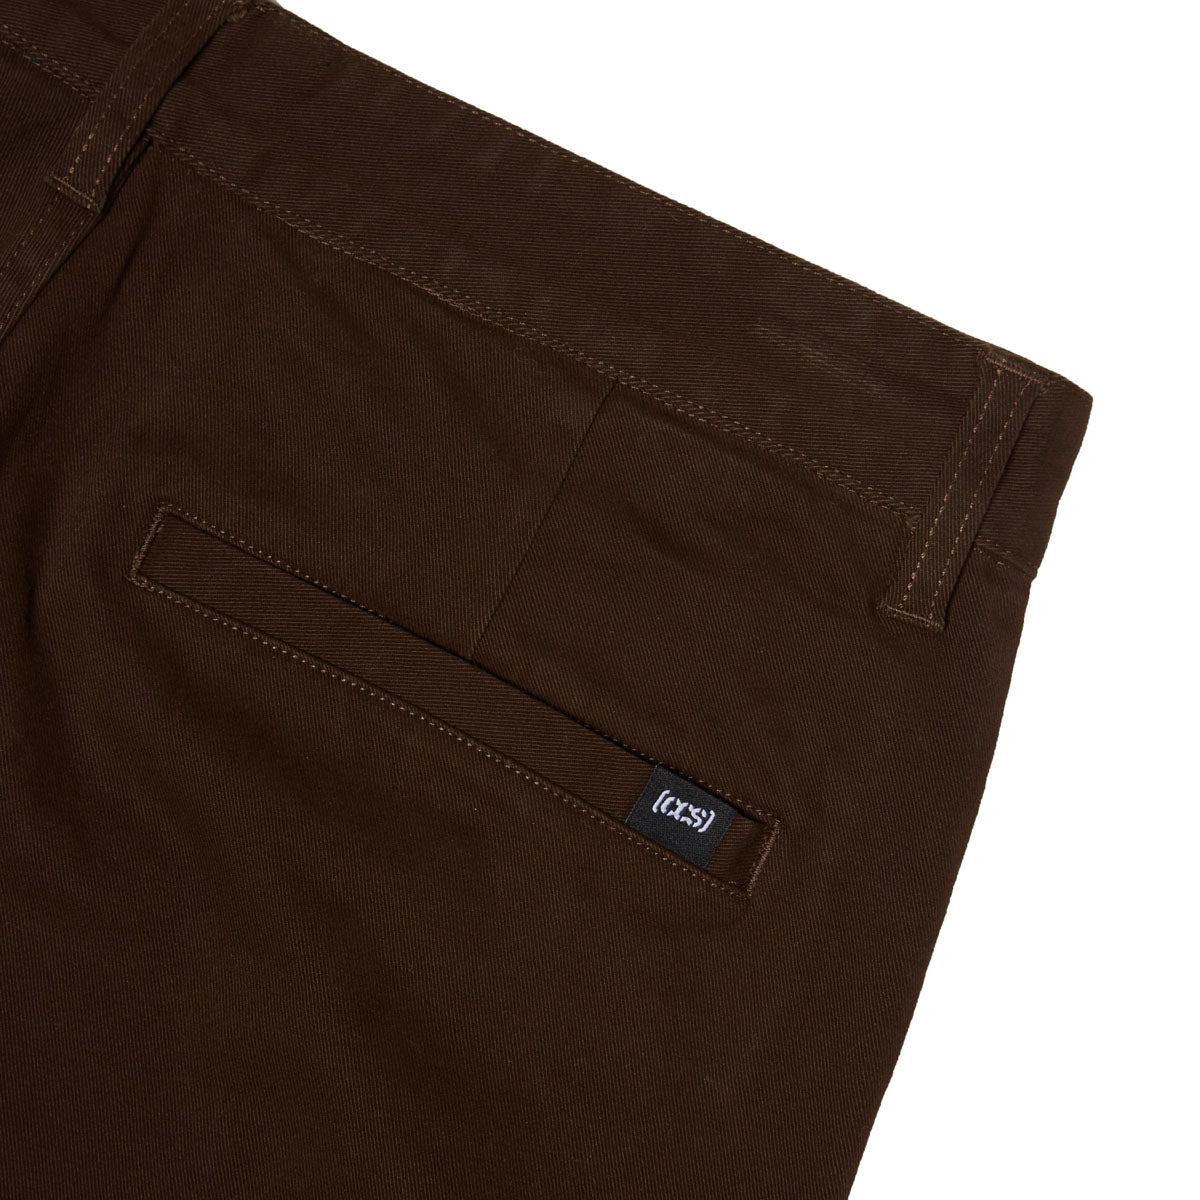 CCS Standard Plus Straight Chino Pants - Brown image 6